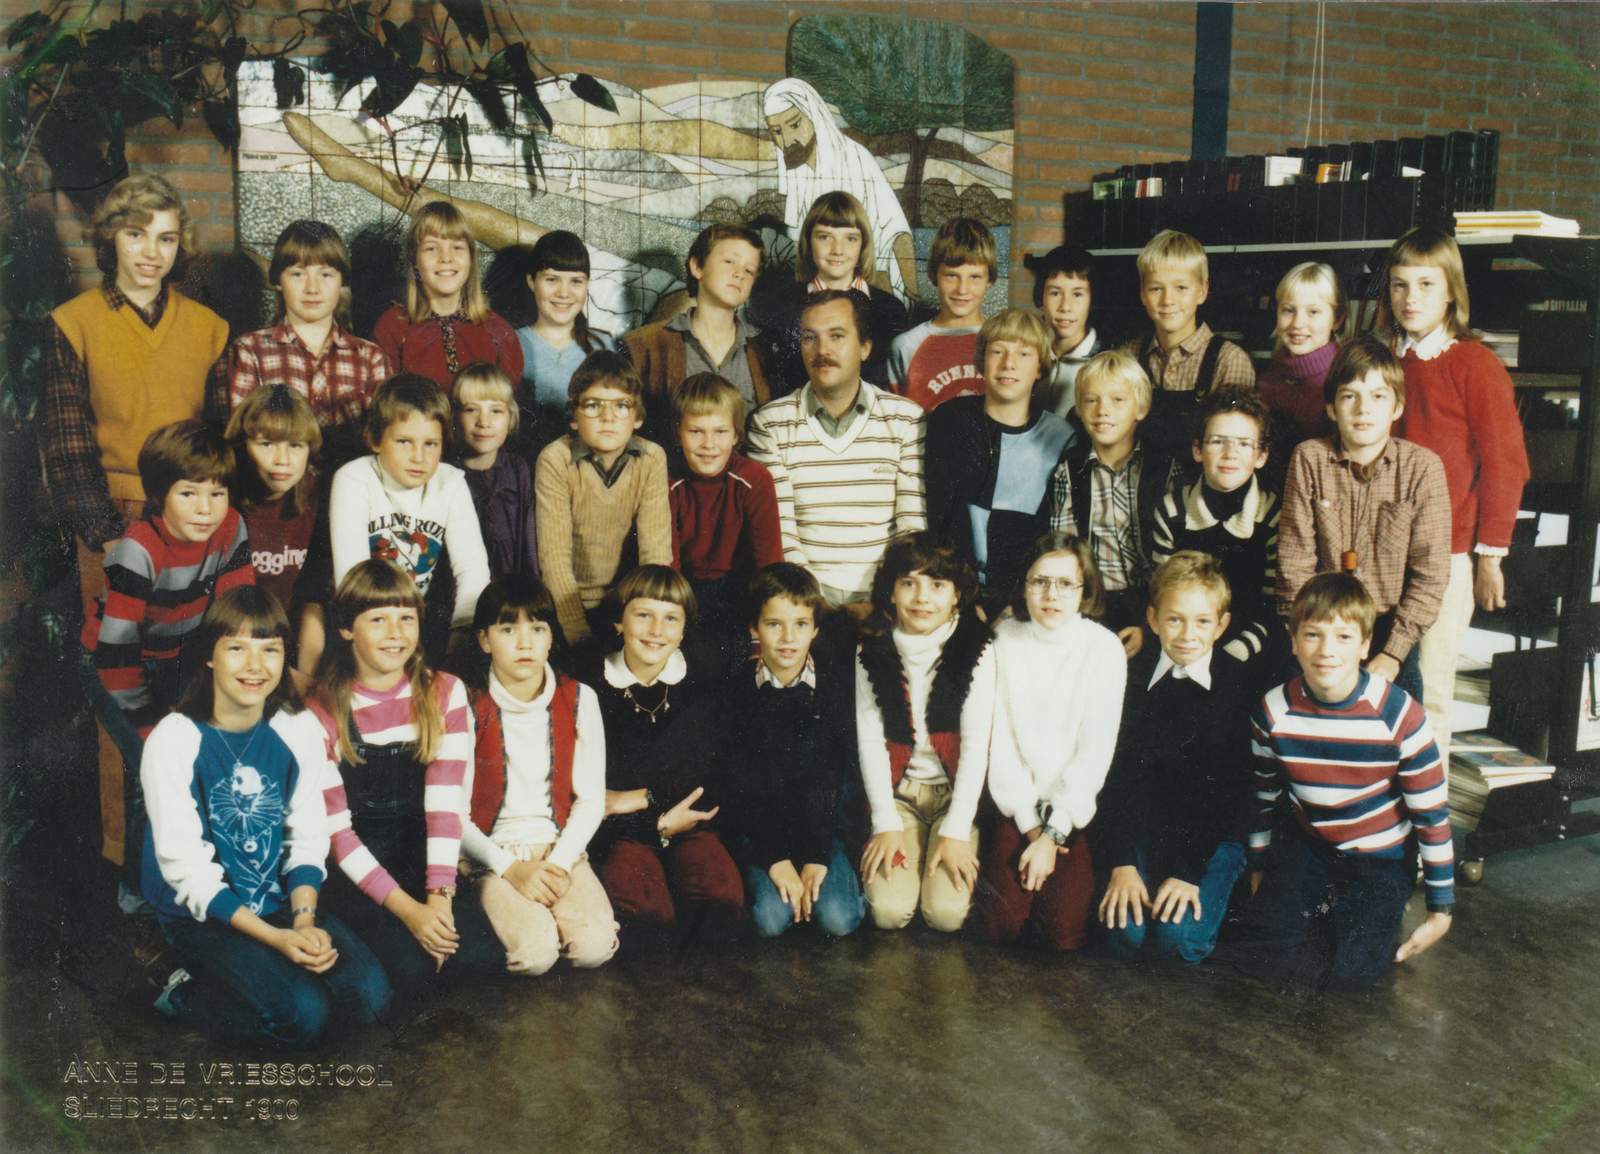 068-105 - Anne de Vriesschool - 1980.jpg